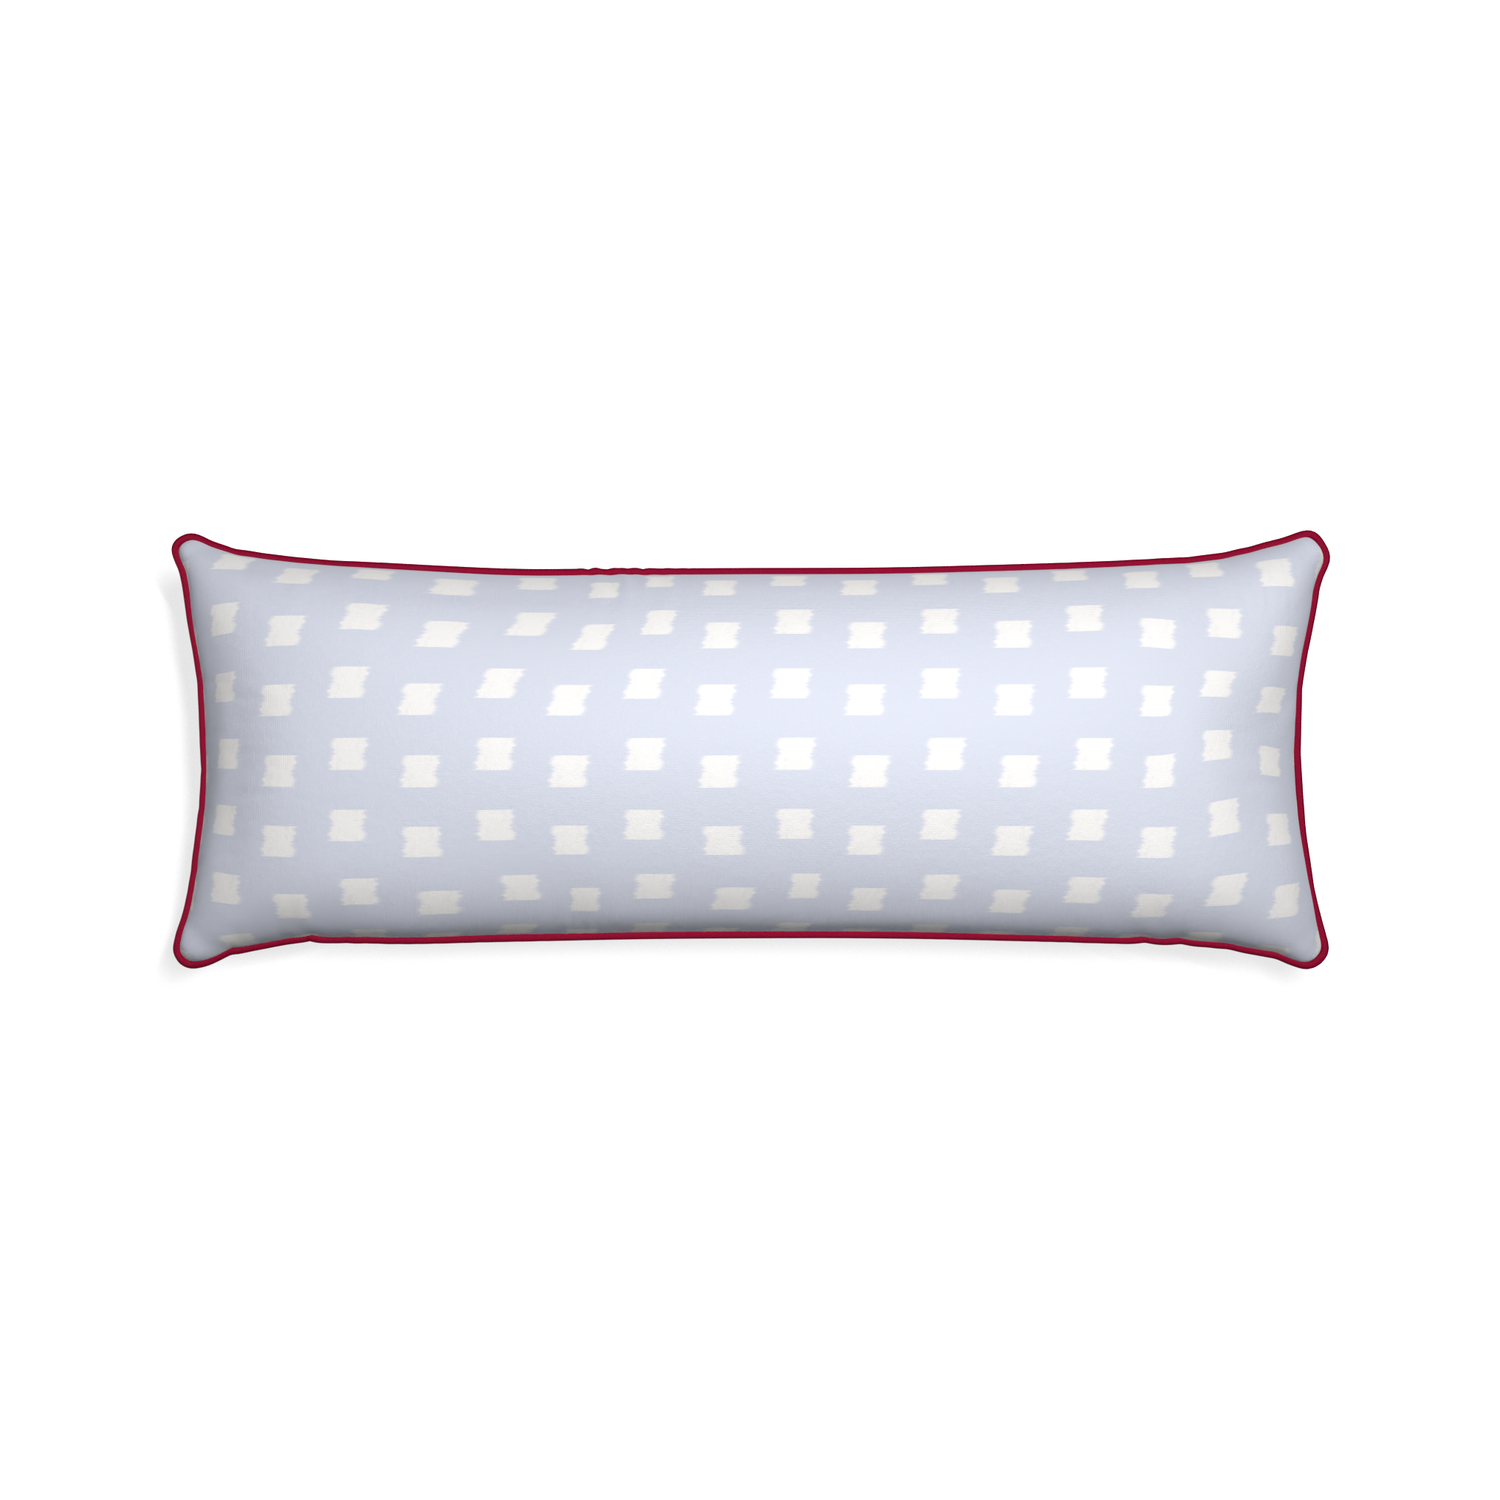 Xl-lumbar denton custom pillow with raspberry piping on white background